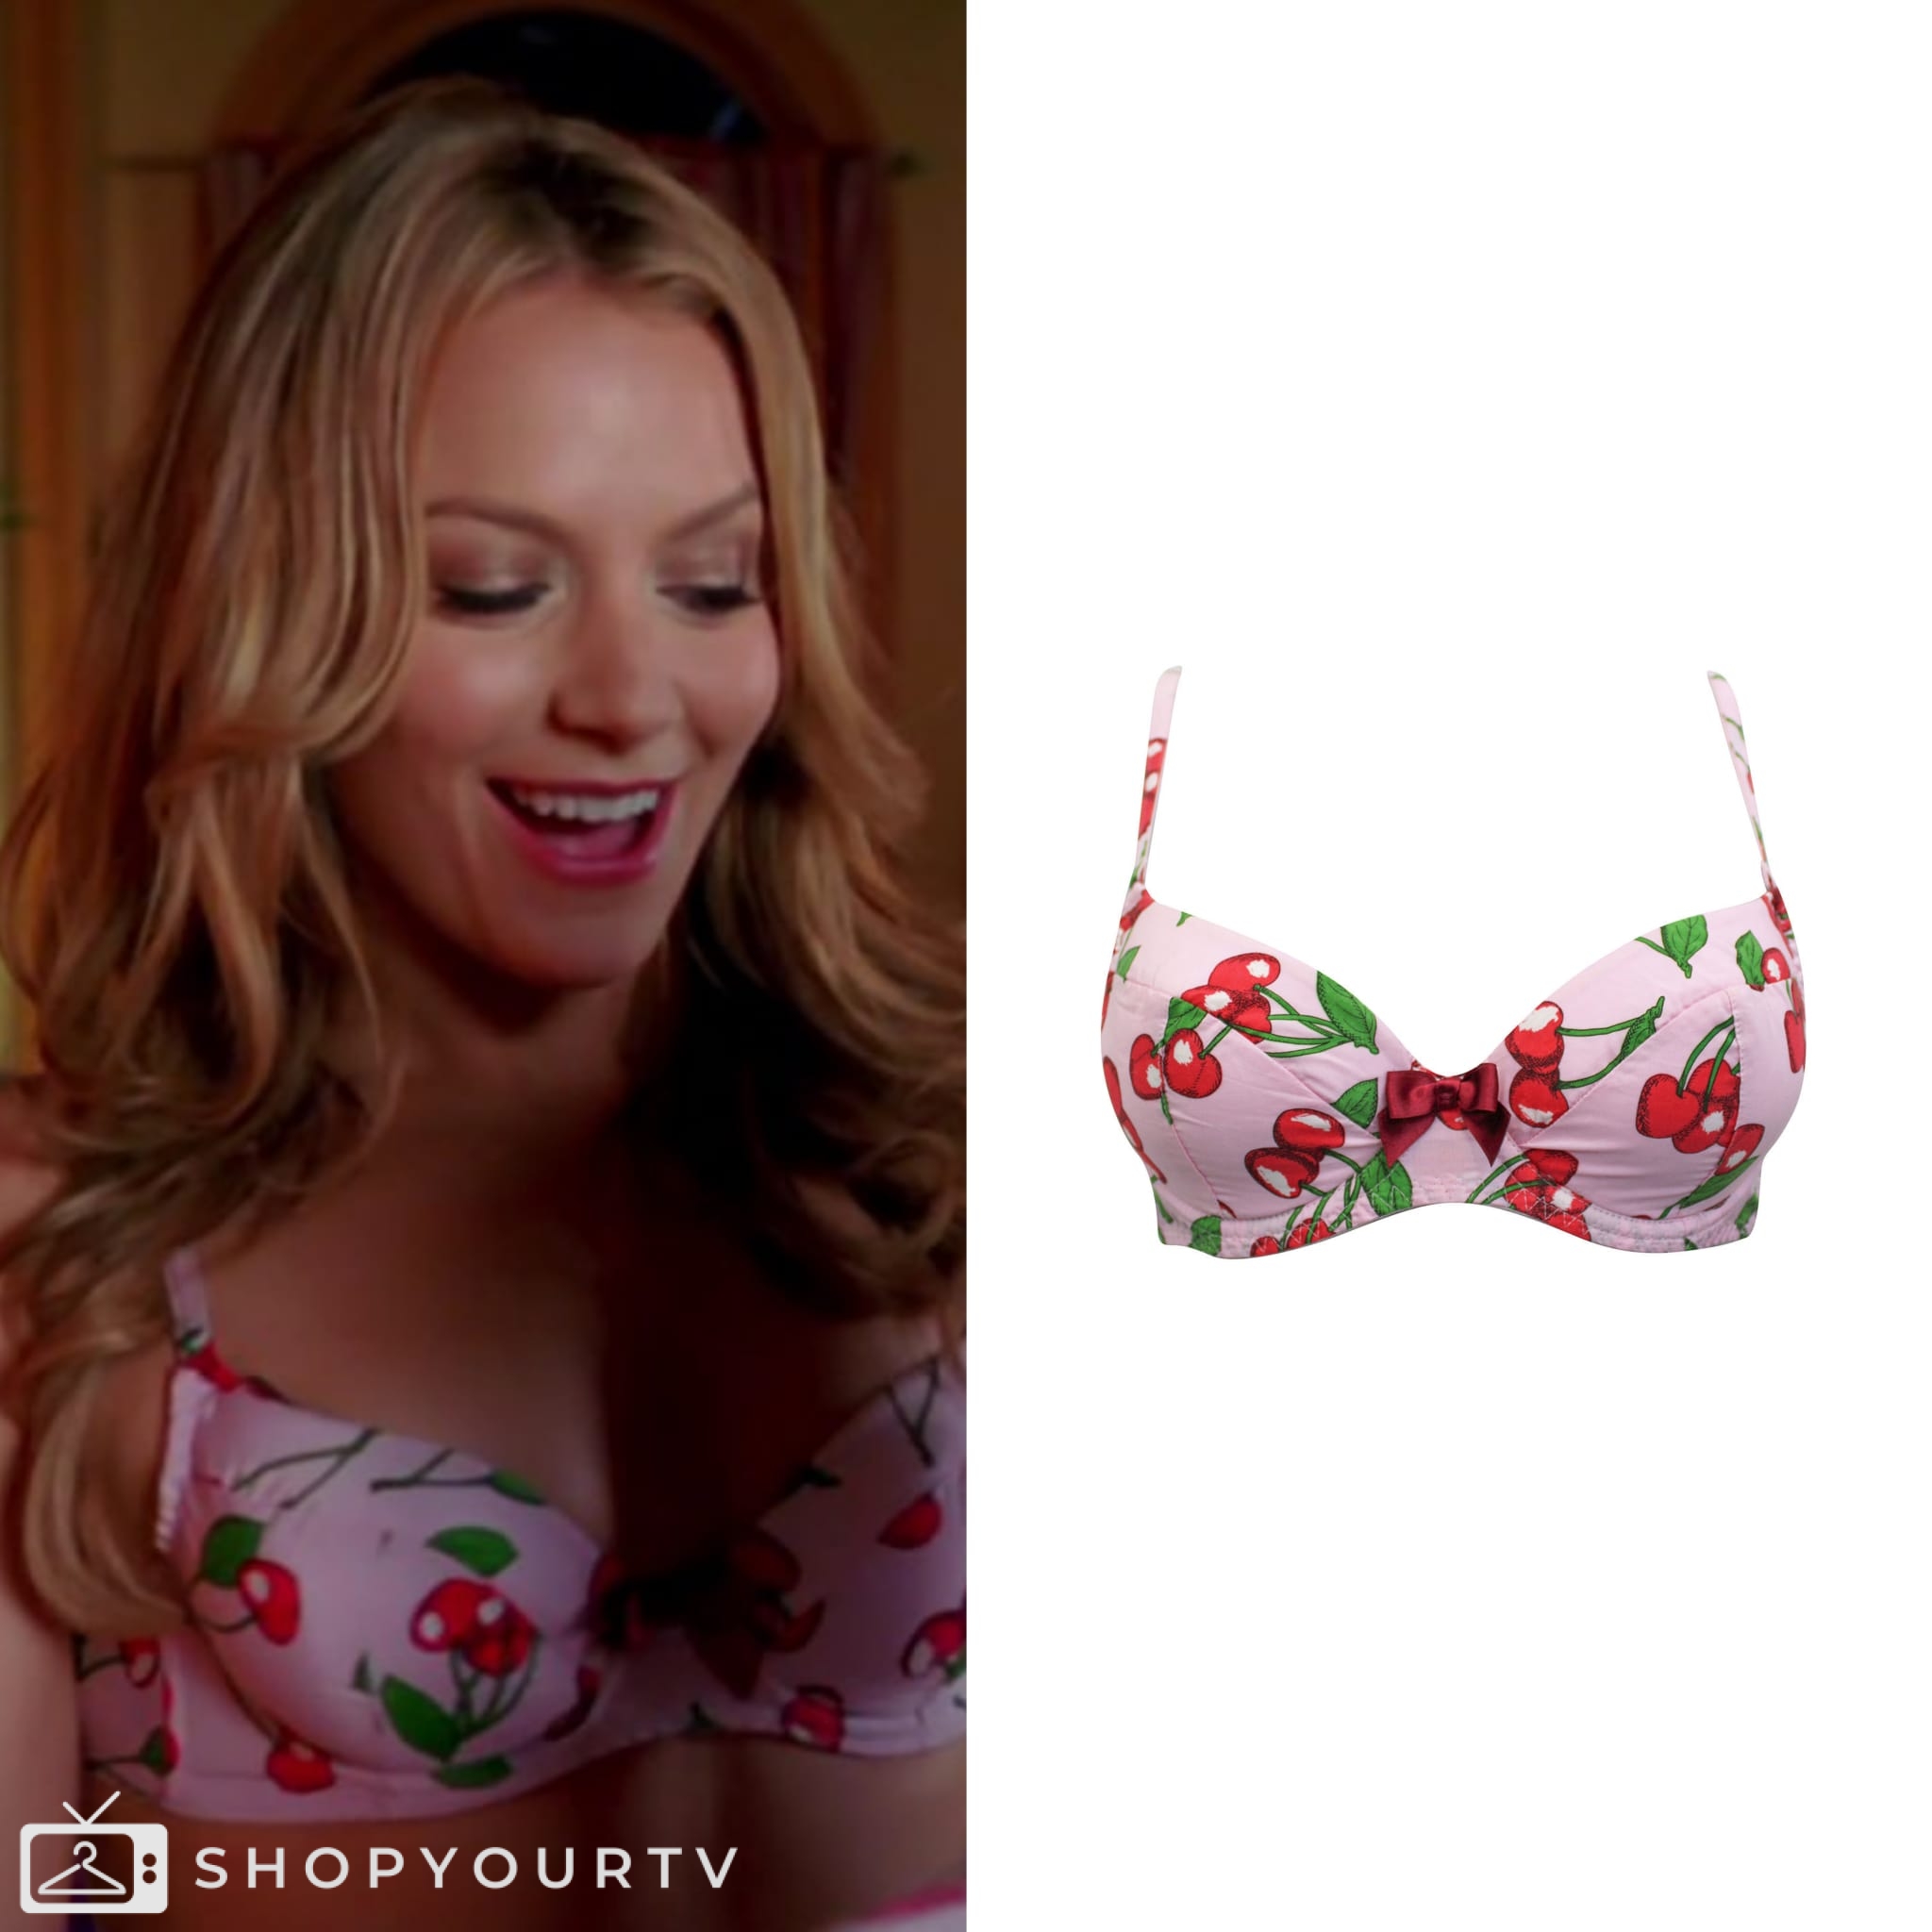 Ugly Betty: Season 3 Episode 7 Amanda's Cherry print bra